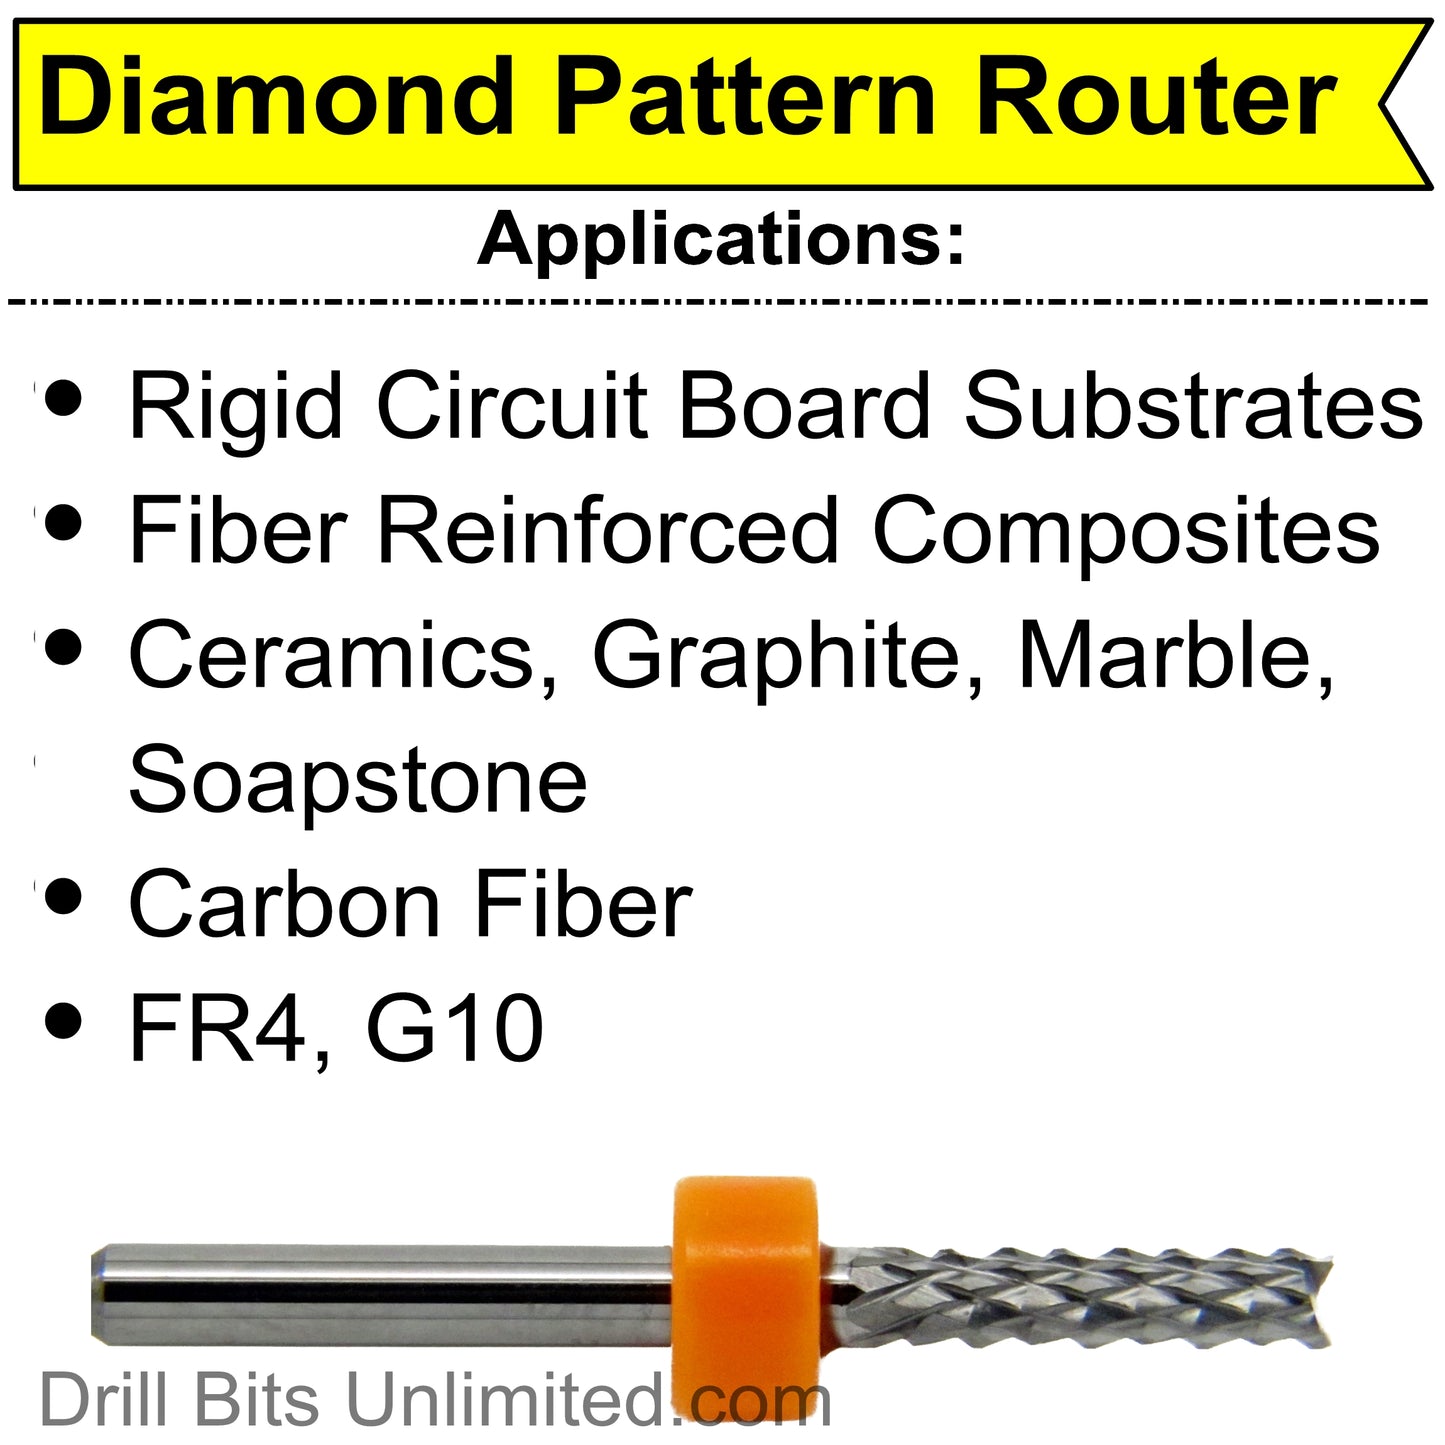 .055" 1.40mm x .275" LOC - Diamond Pattern Carbide Router Bit - Drill Point - R128